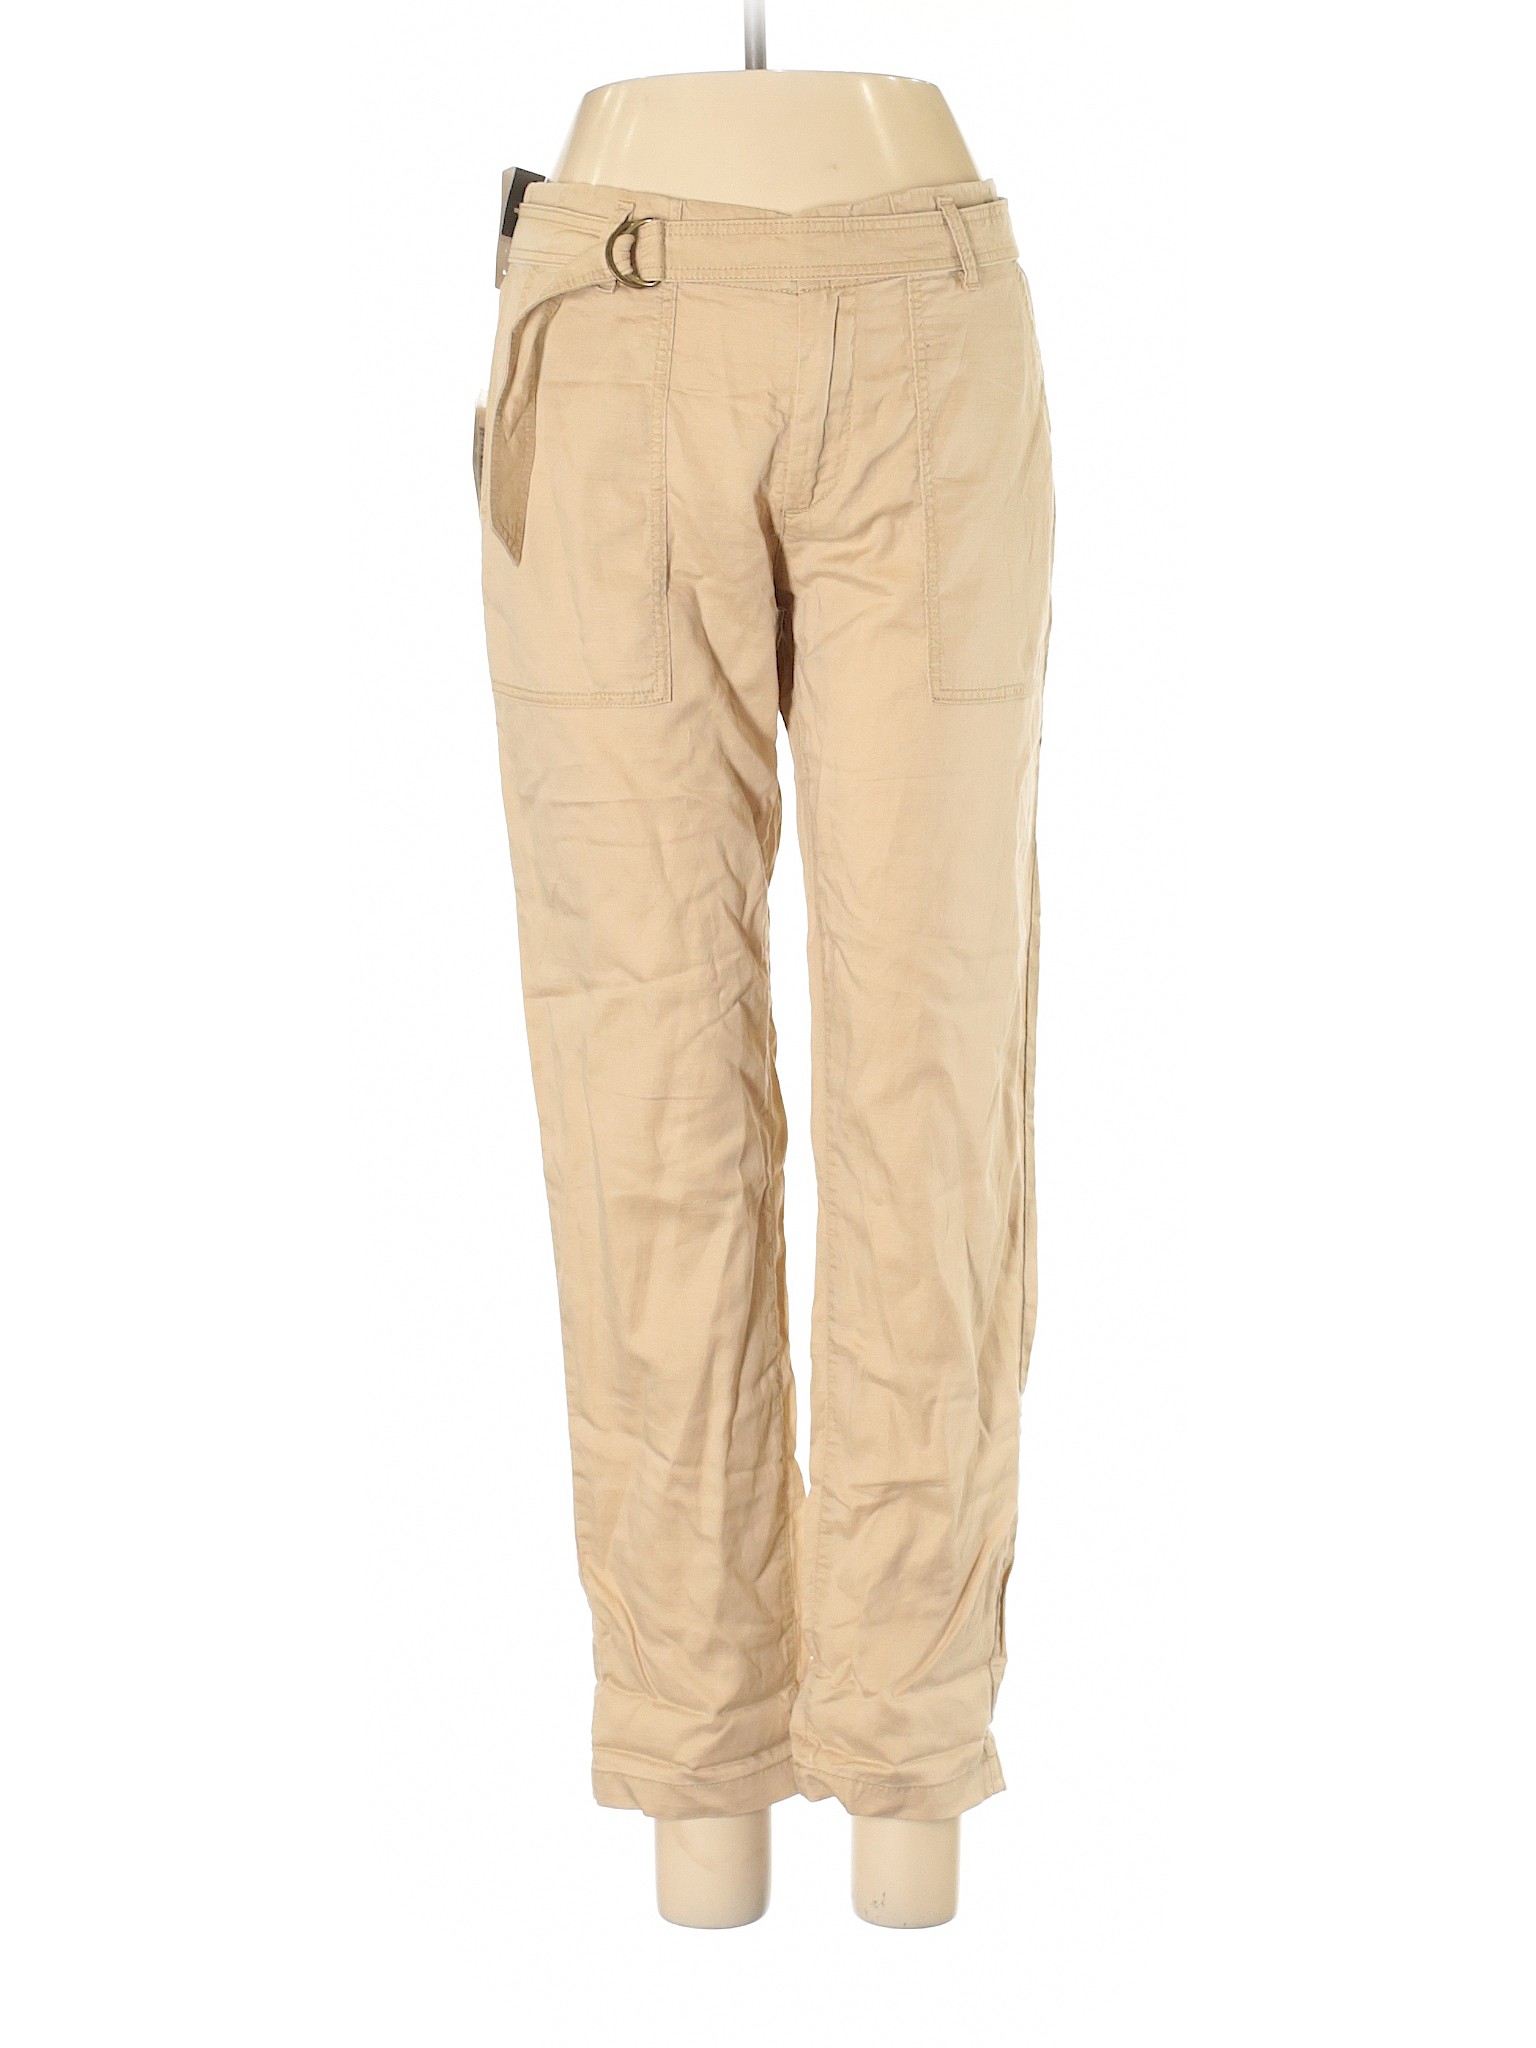 NWT Uniqlo Women Brown Casual Pants 24W | eBay